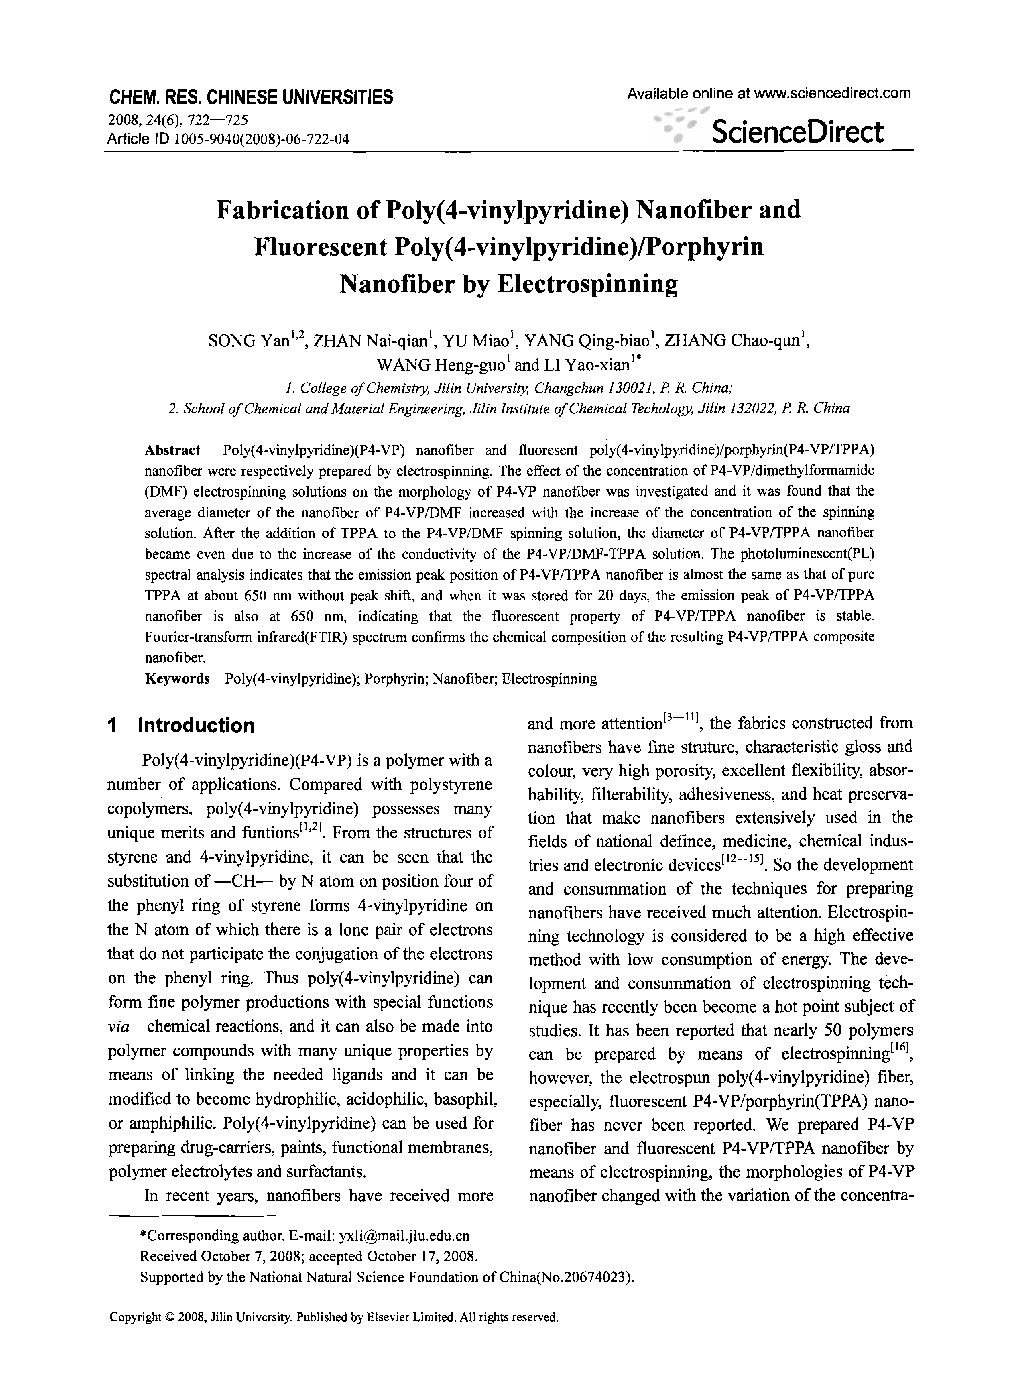 Fabrication of Poly(4-vinylpyridine) Nanofiber and Fluorescent Poly(4-vinylpyridine)/Porphyrin Nanofiber by Electrospinning